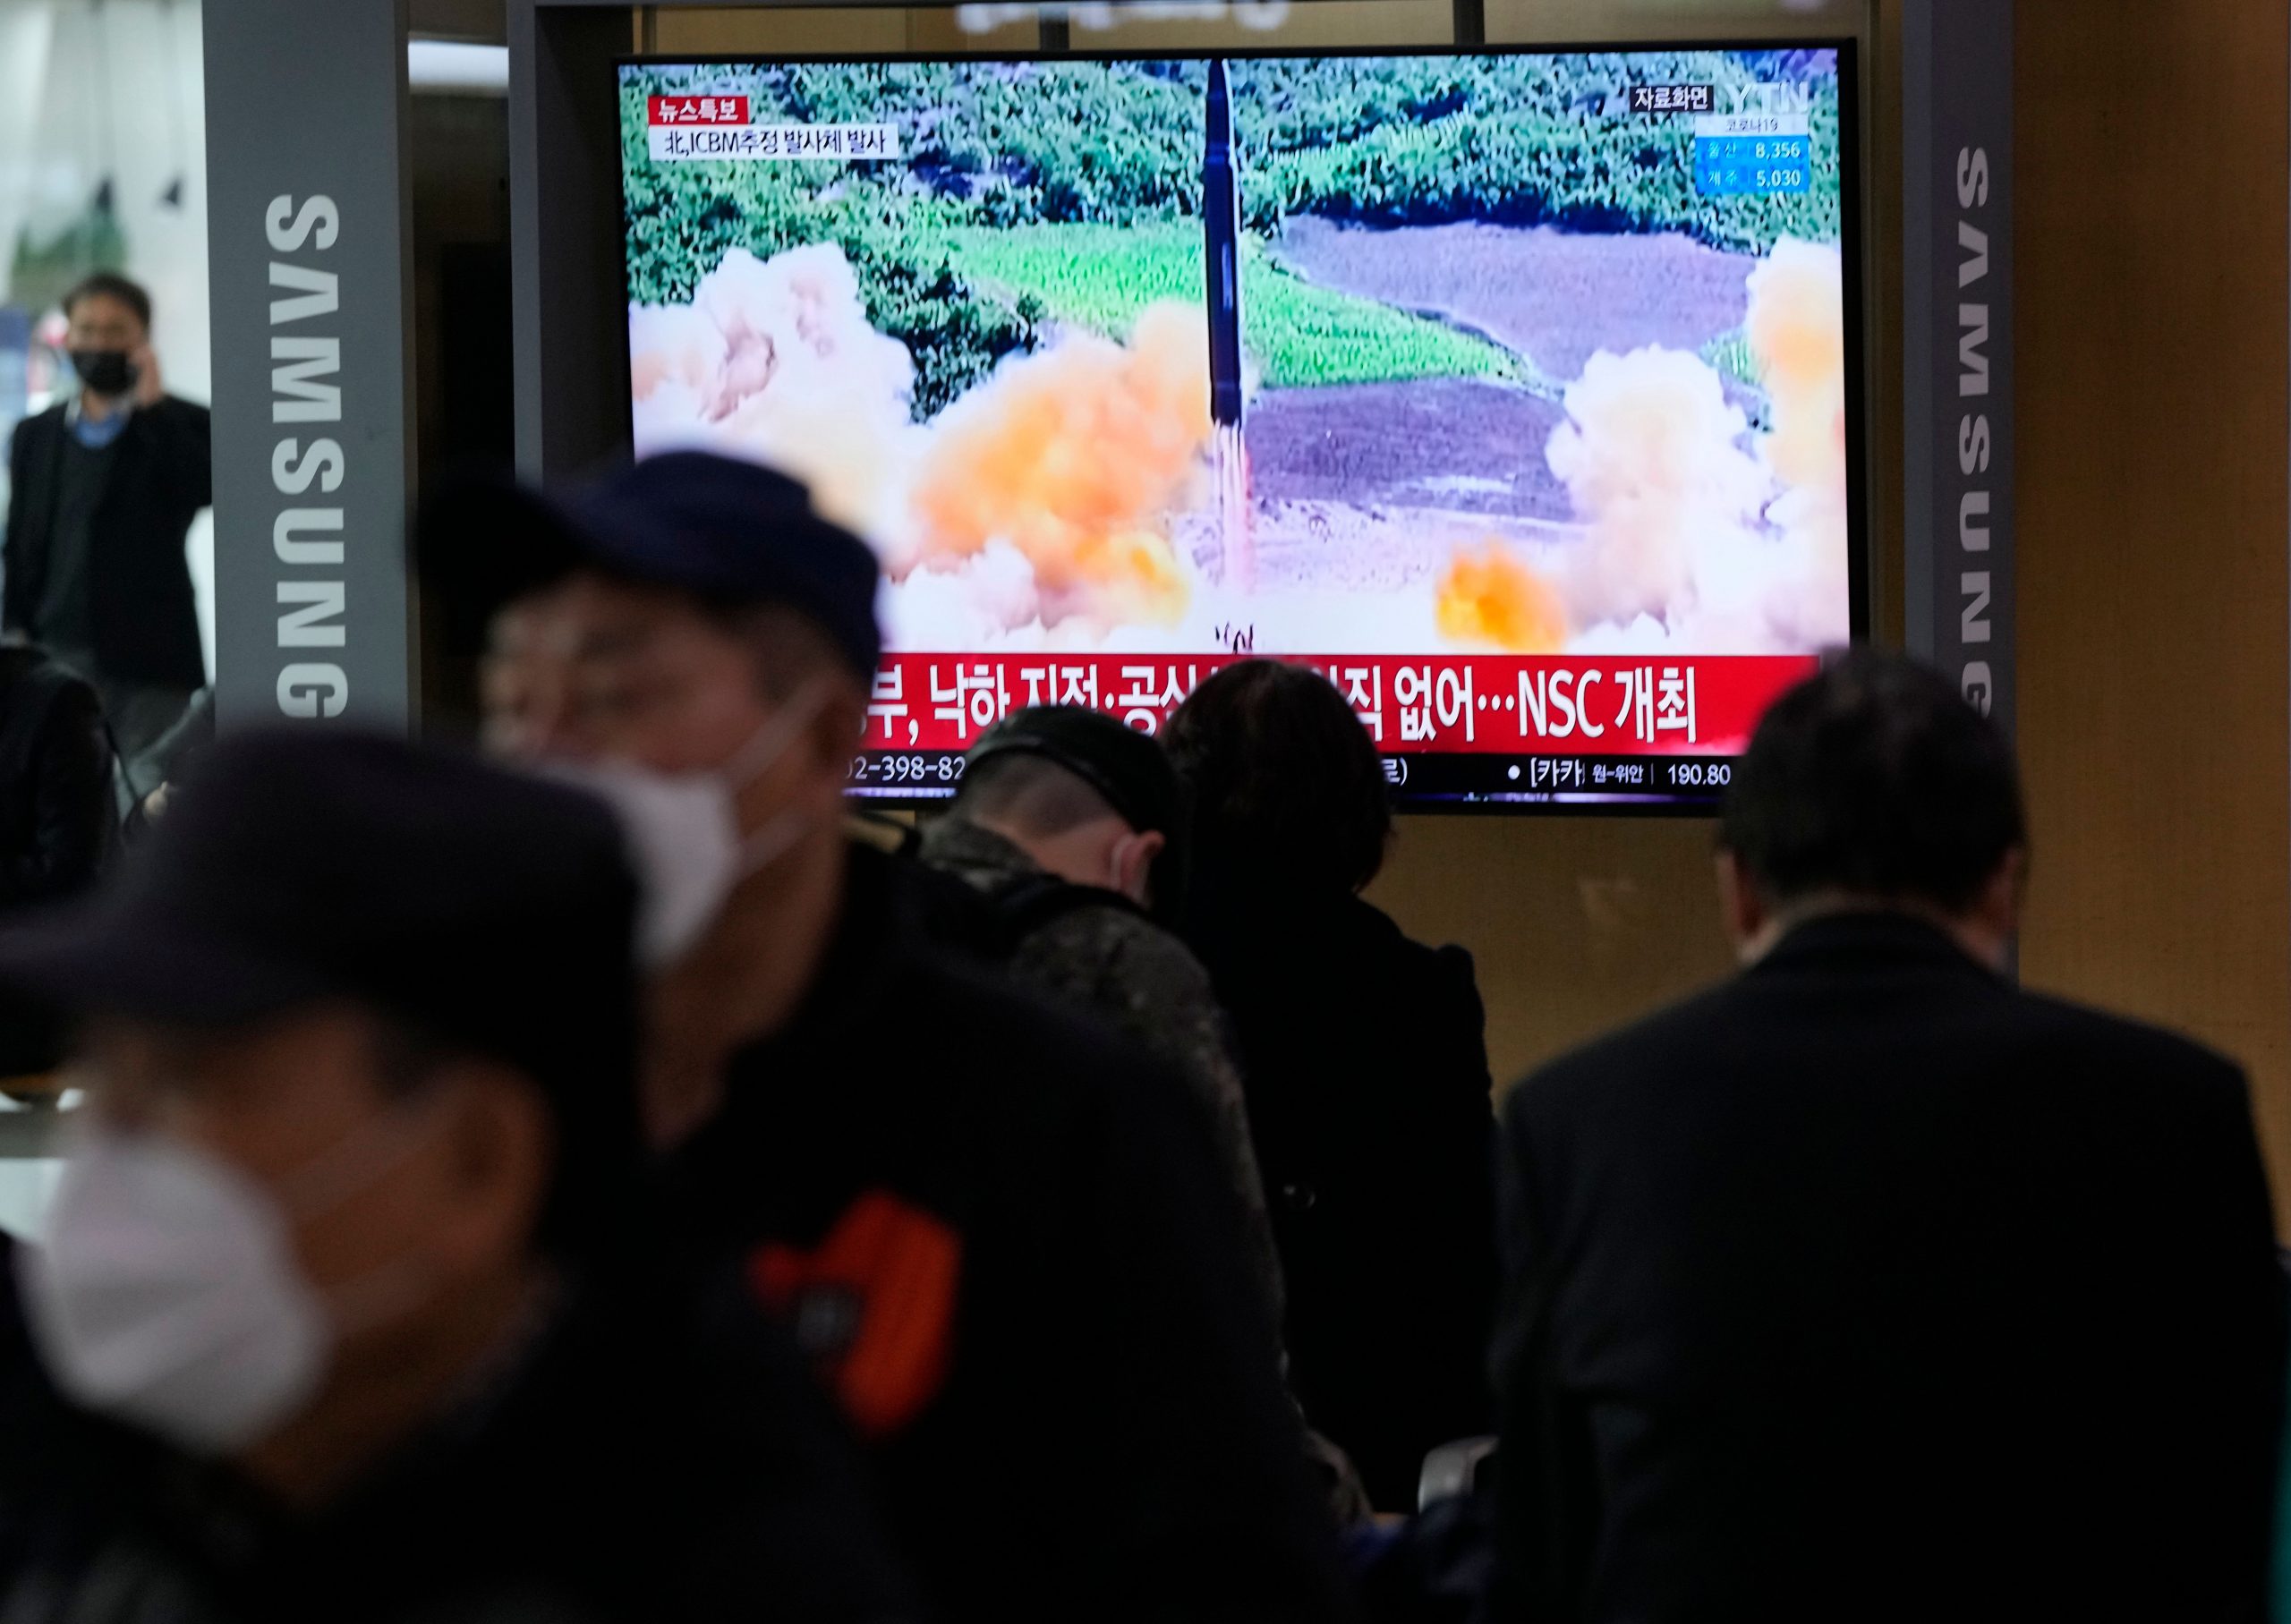 North Korean missile, probably ballistic, lands in Japan economic zone